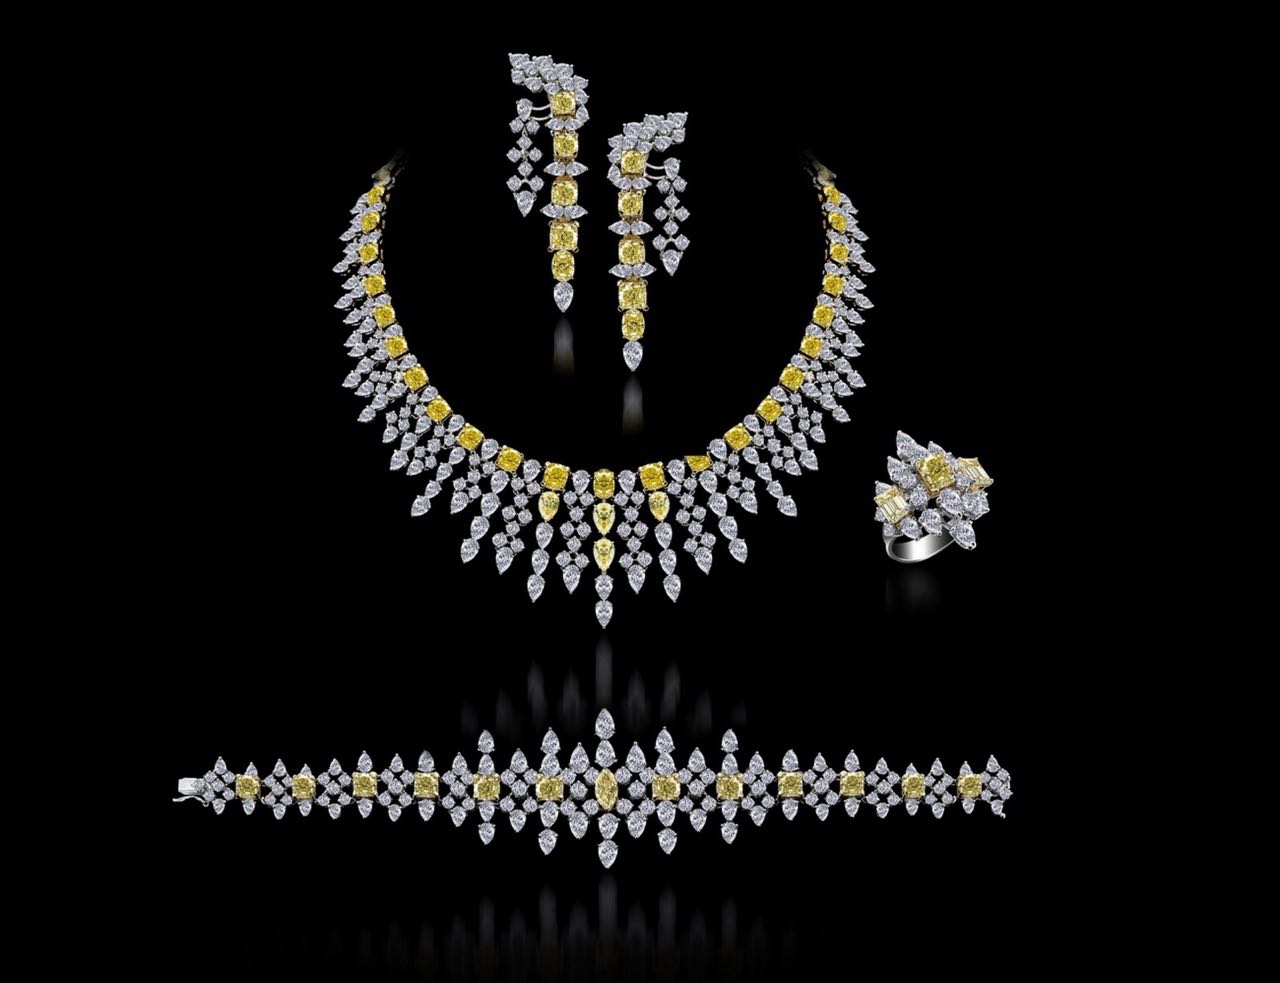 Diamond necklace, earrings, bracelet and ring set